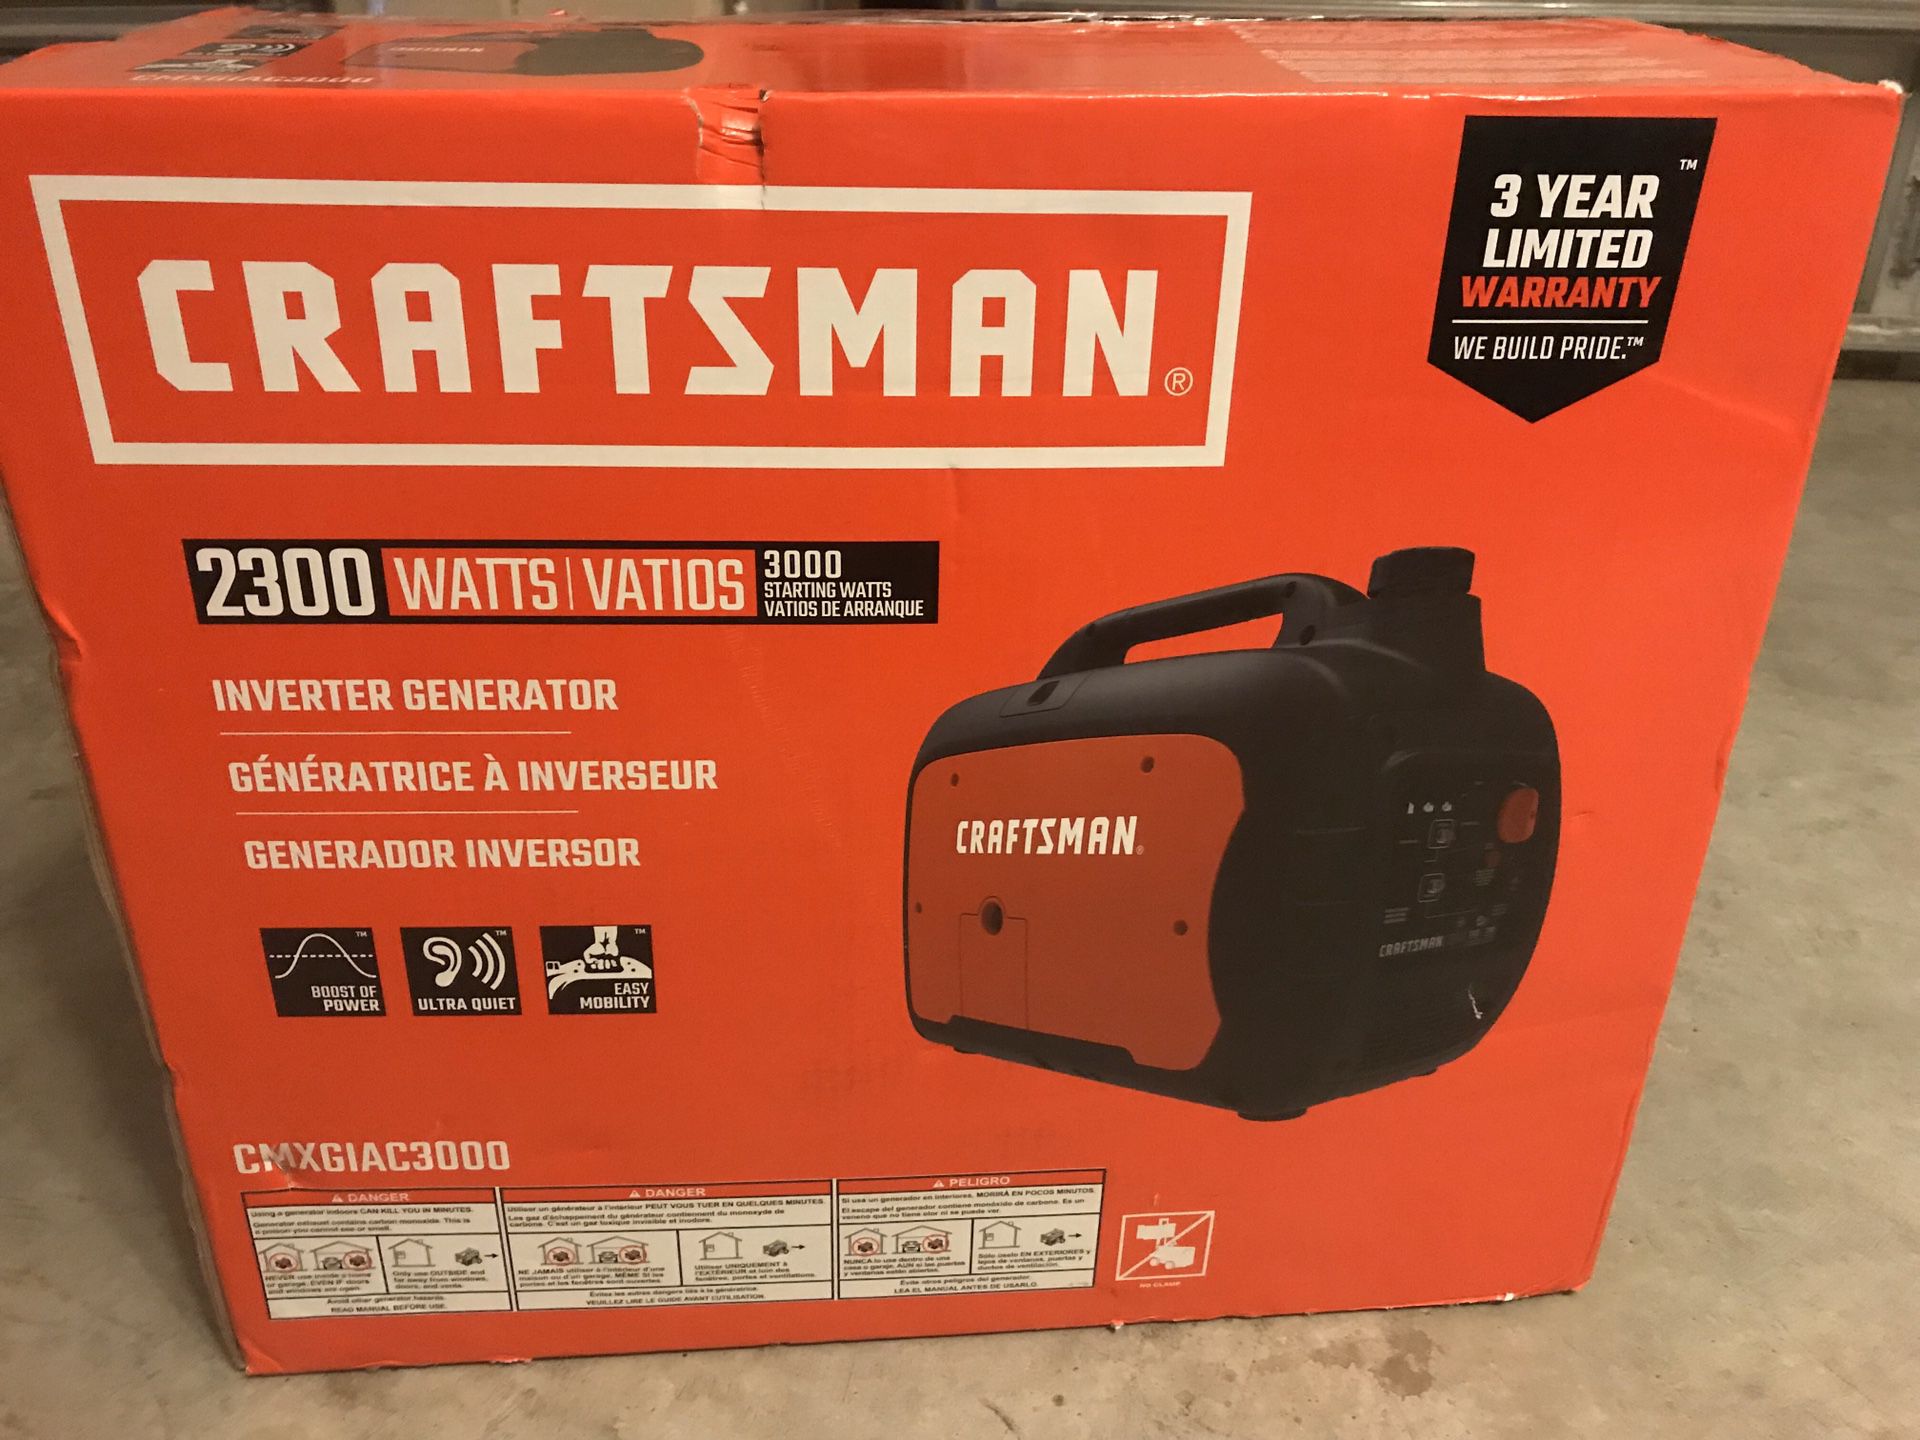 Craftsman FREE Tool—> CRAFTSMAN 3000 Watt Gasoline Portable Generator inverter + FREE Craftsman 1/4-in. Mini-Ratchet Wrench Air tool